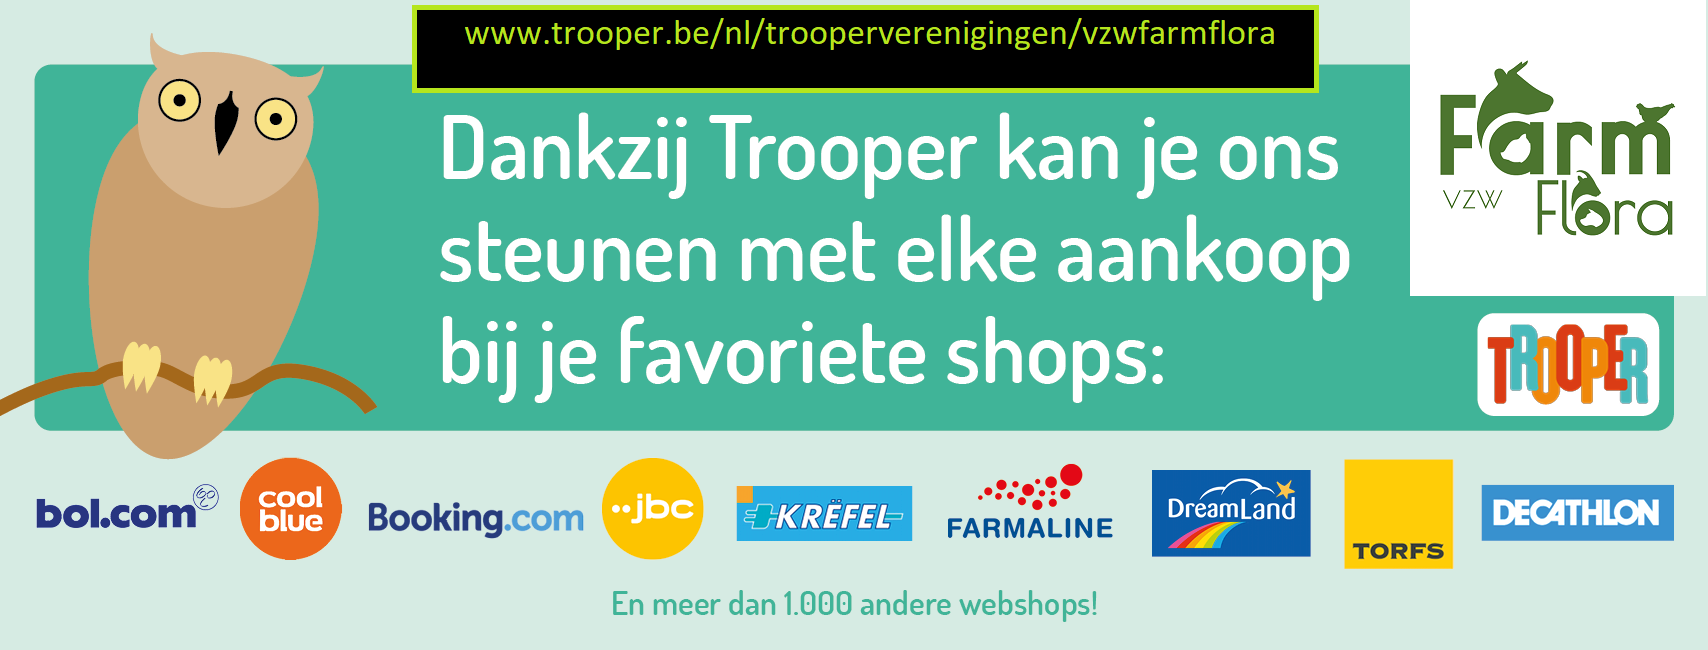 Trooper banner vzw Farm Flora